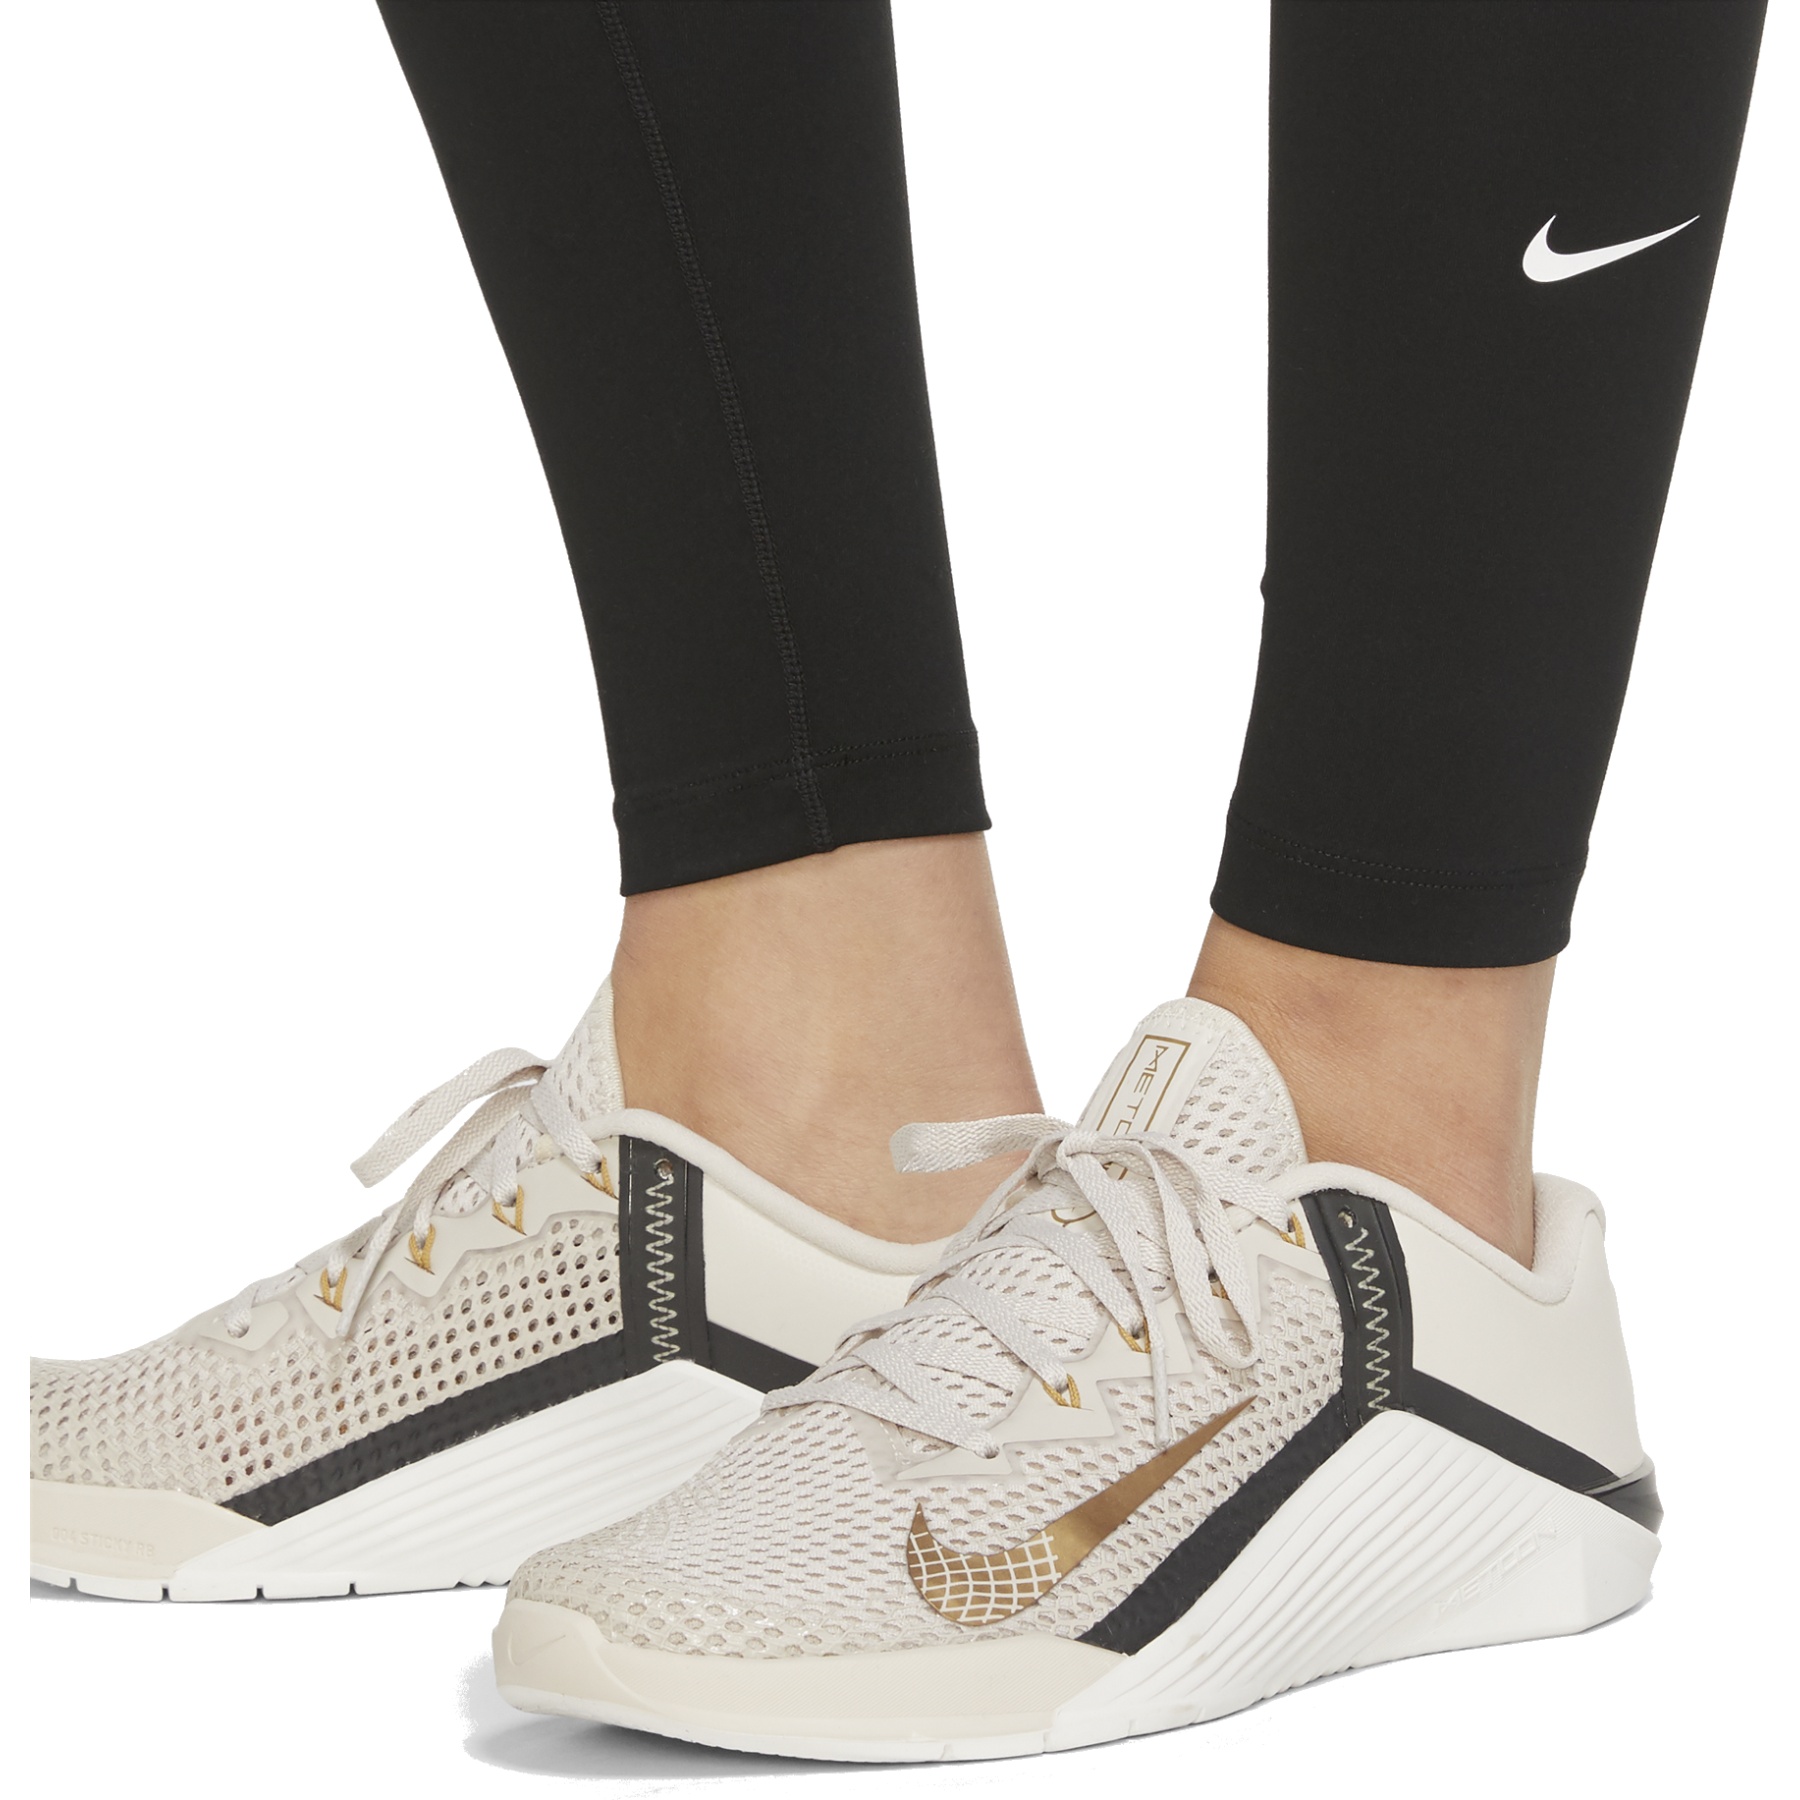 Nike One Dri-FIT Women's High-Rise Leggings - Black